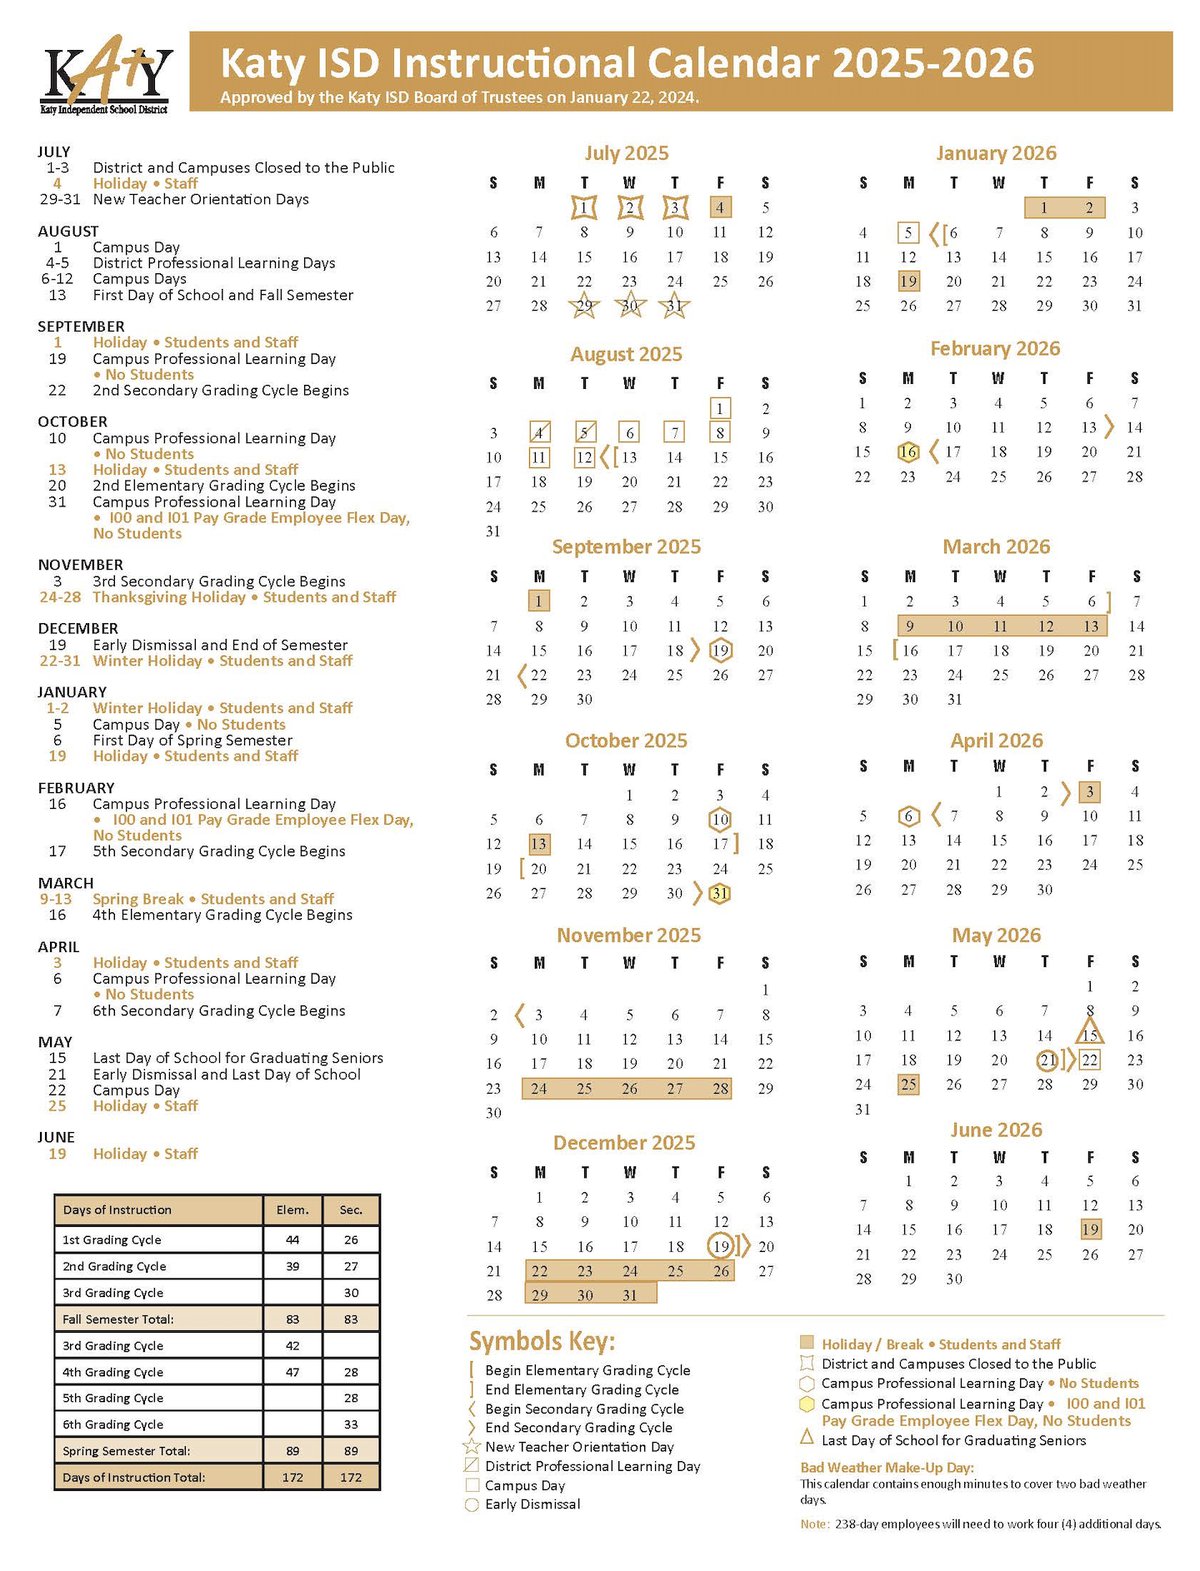 Katy ISD school board approves 20252026 Instructional calendar